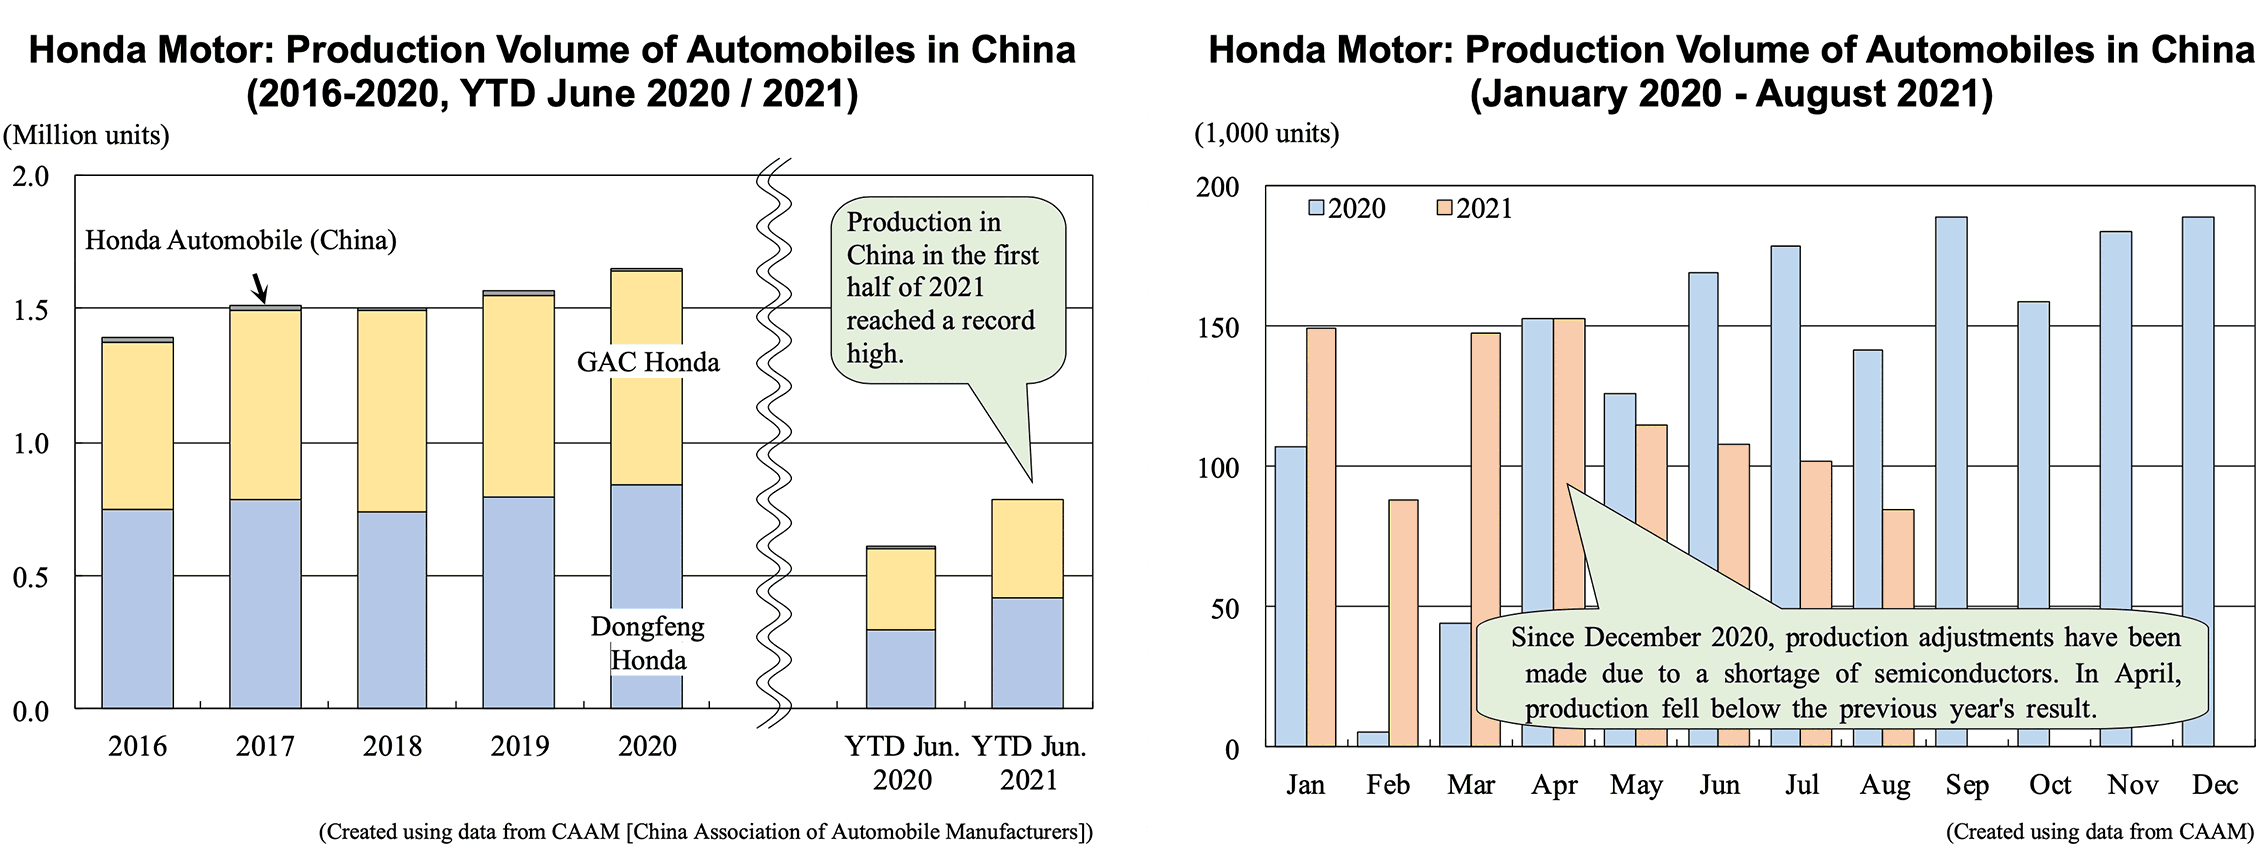 Honda Motor: Production Volume of Automobiles in China (2016-2020, YTD June 2020 / 2021) | Honda Motor: Production Volume of Automobiles in China (January 2020 - August 2021)